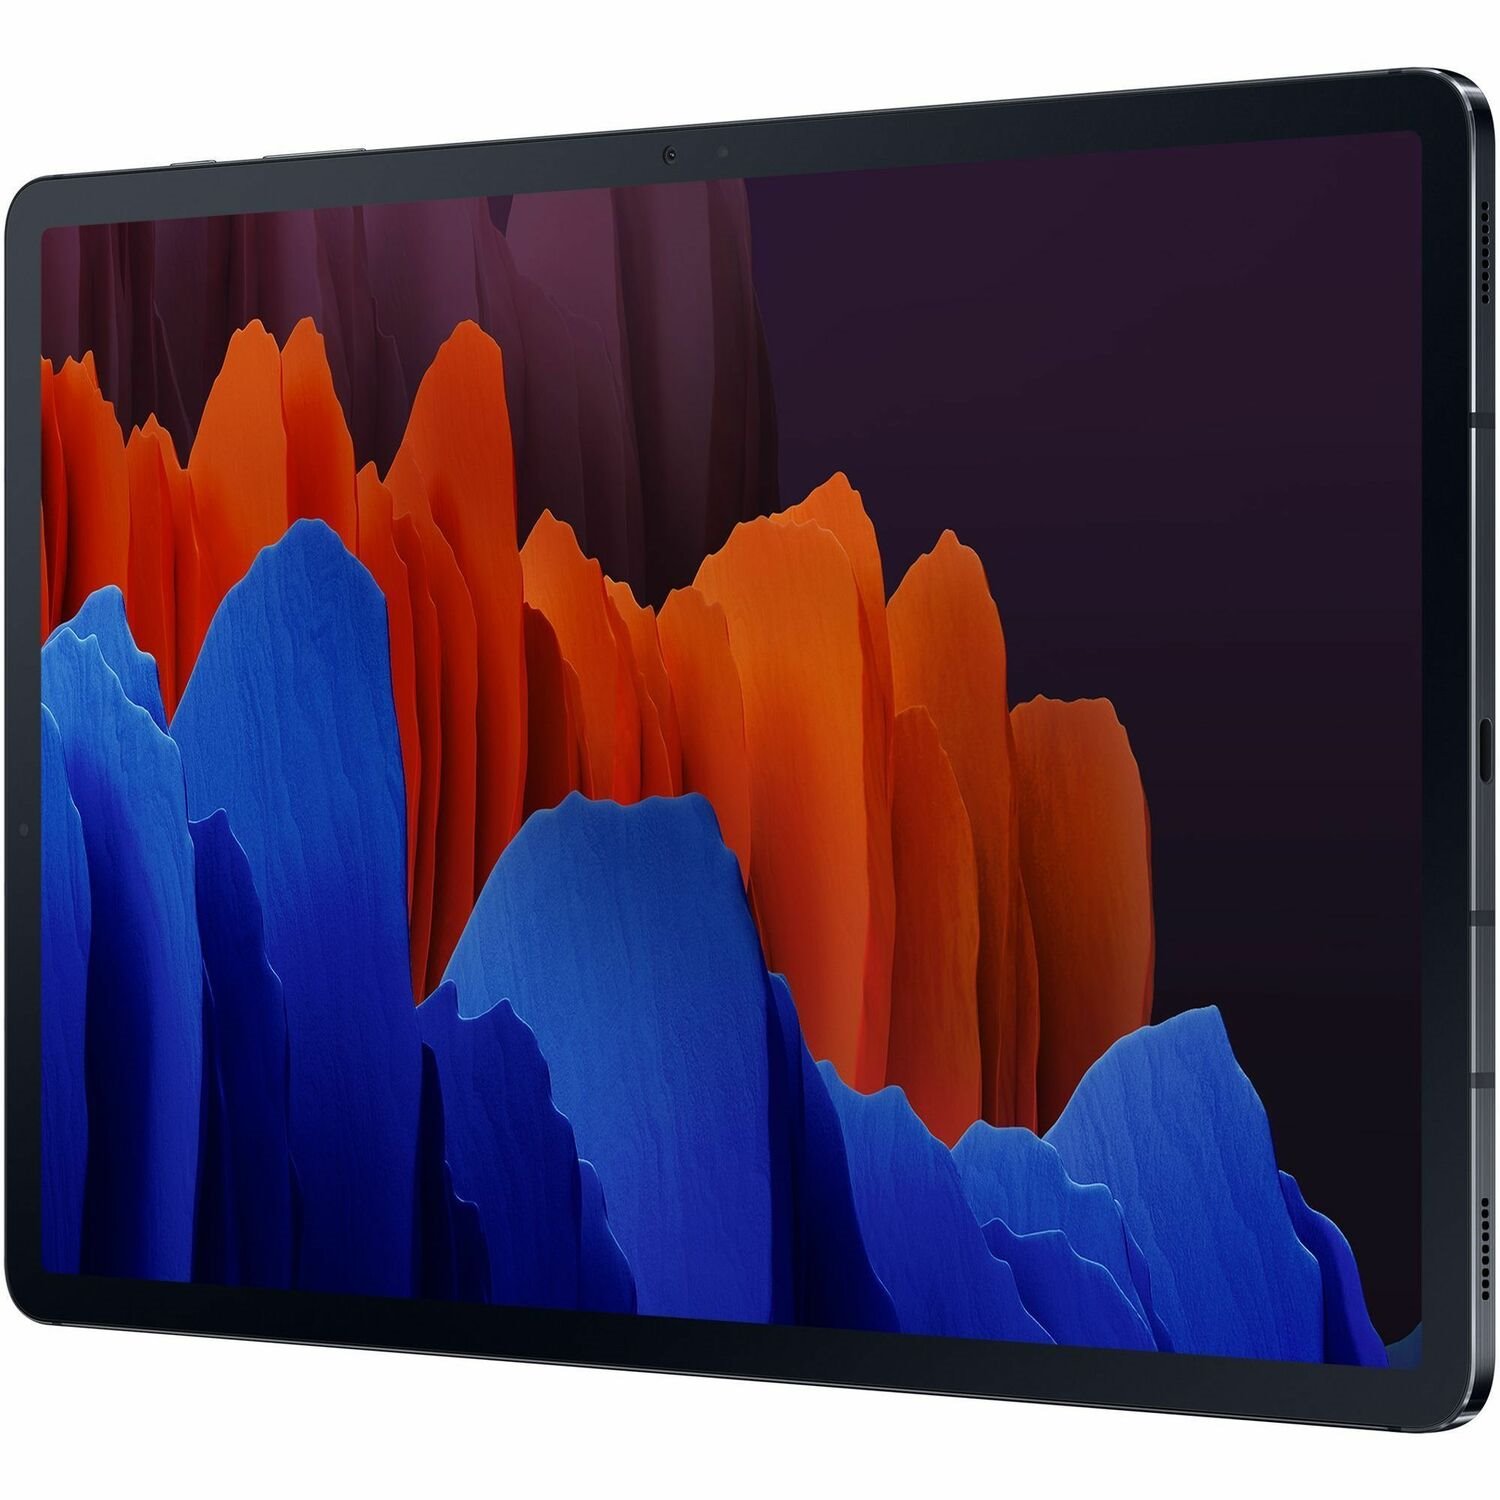 Samsung Galaxy Tab S7+ SM-T970 Tablet - 12.4" WQXGA+ - Qualcomm Snapdragon 865 5G+ Octa-core - 6 GB - 256 GB Storage - Android 10 - Mystic Black